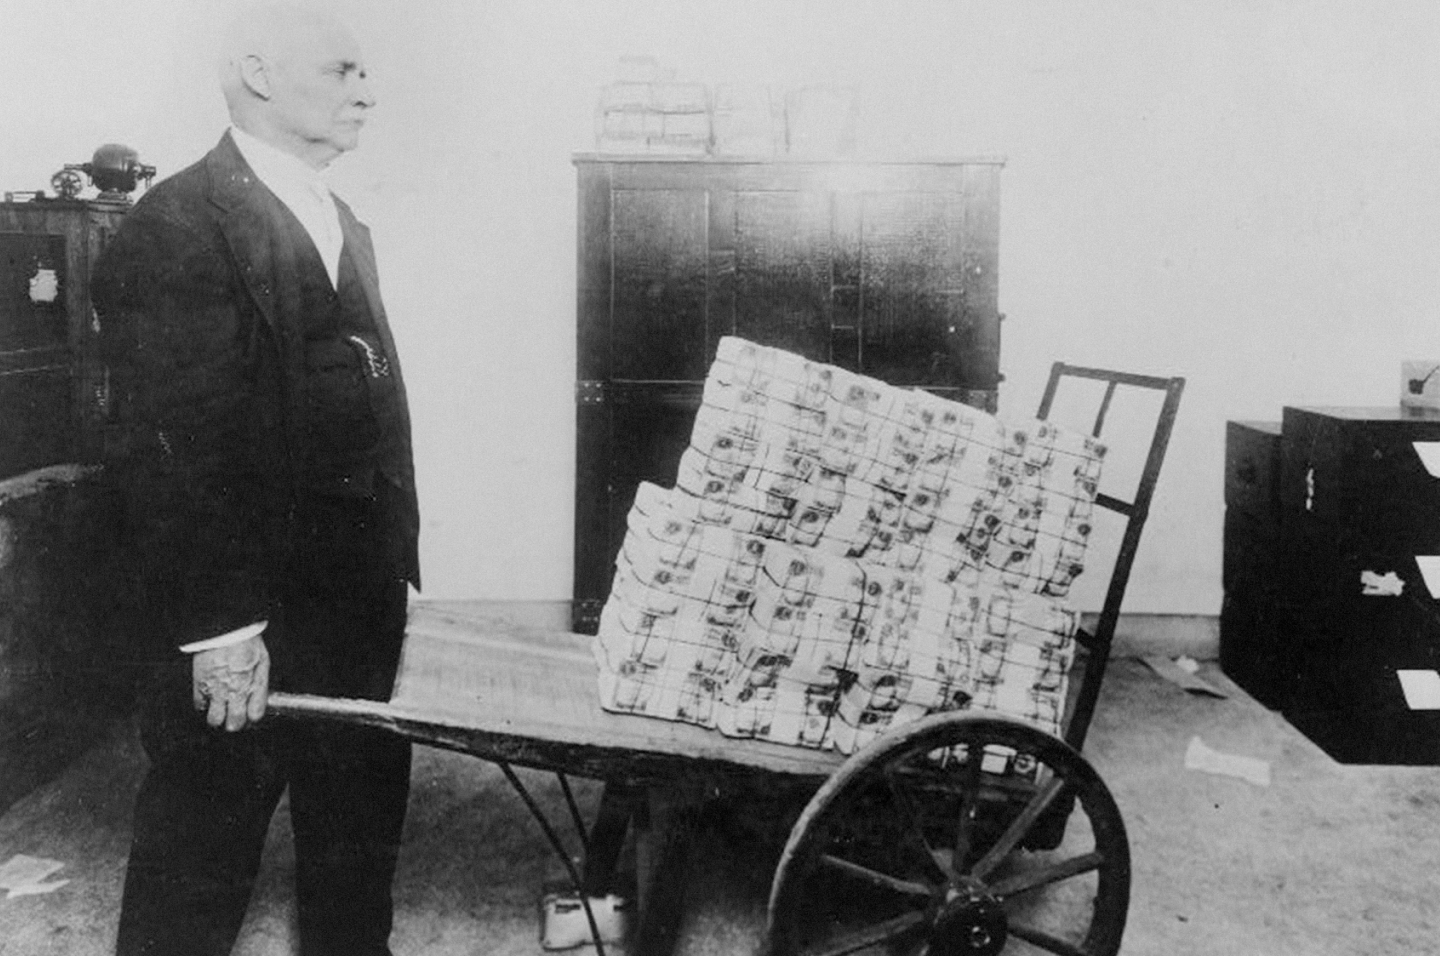 An older gentleman wheeling a cart loaded with cash